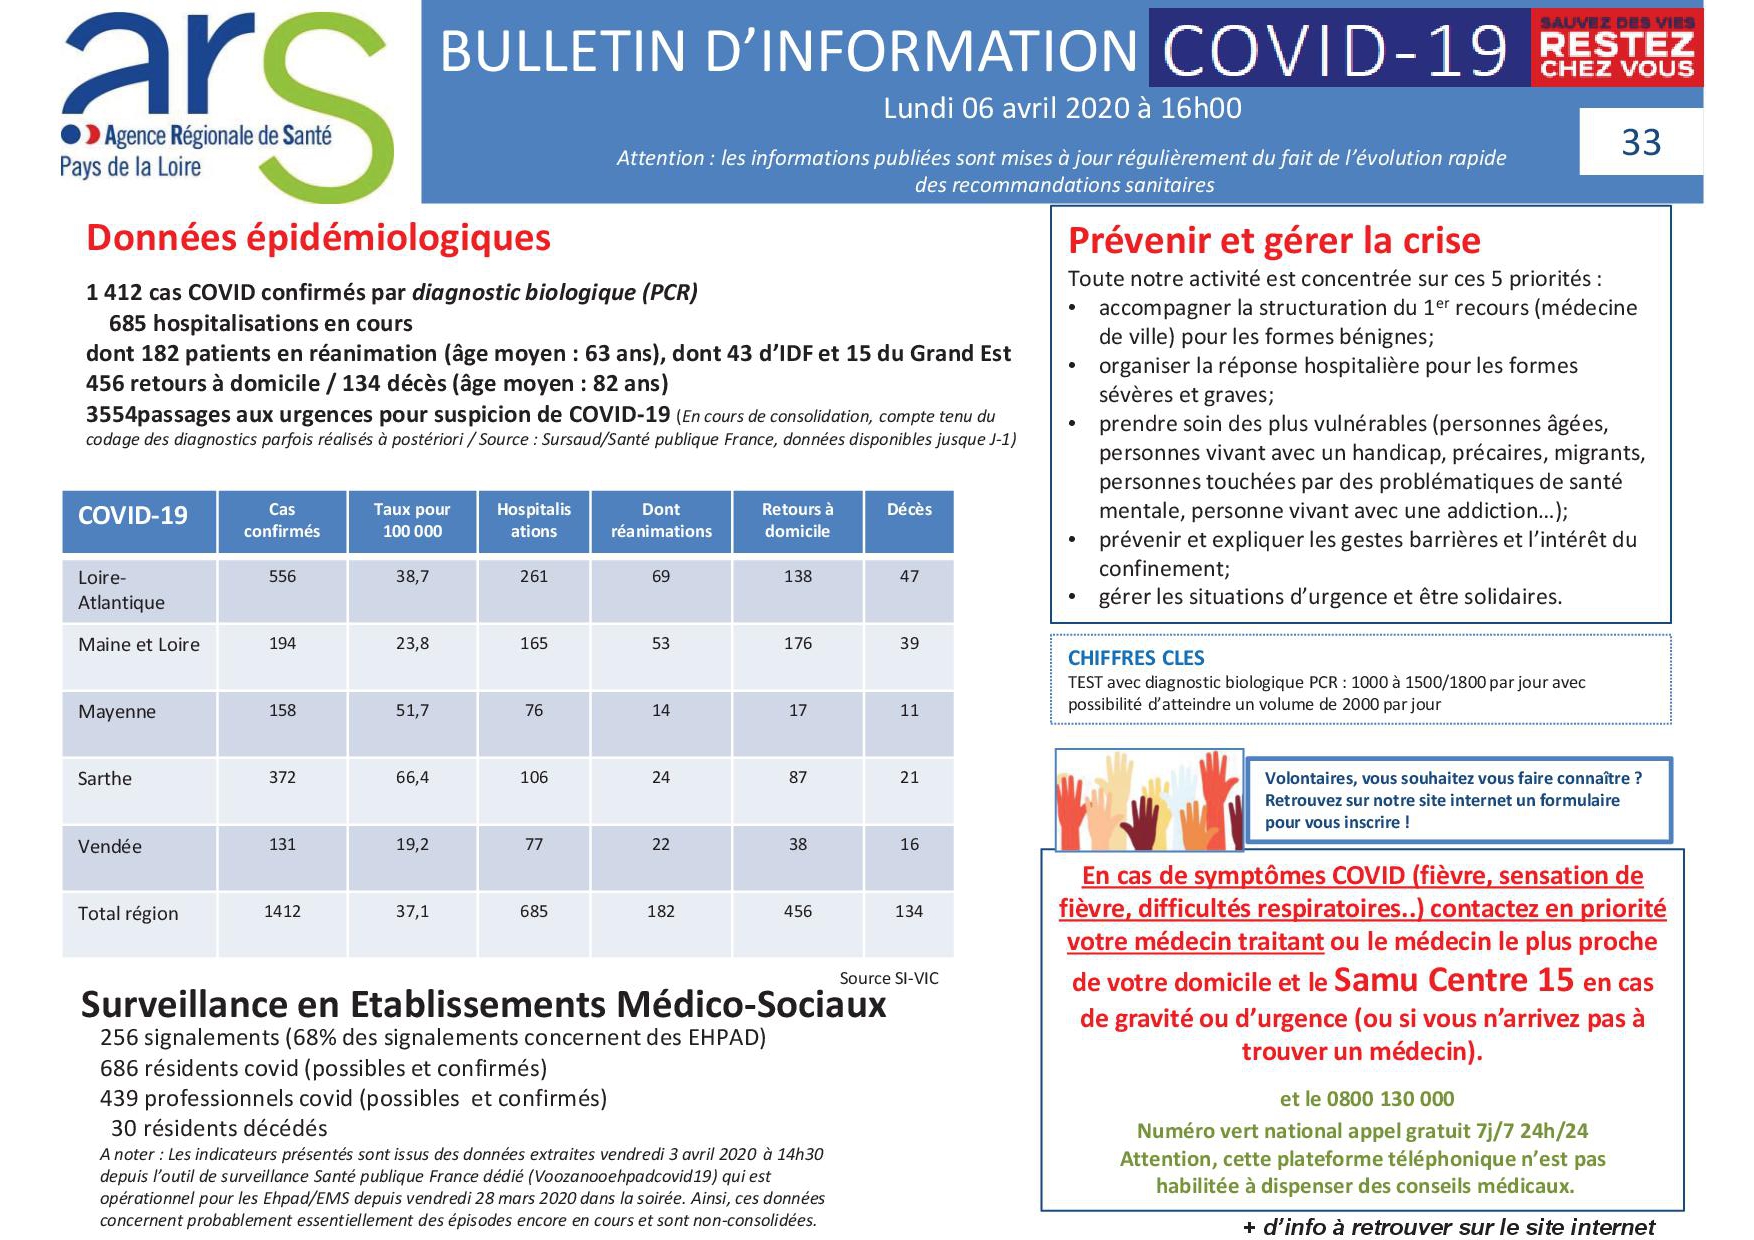 Bulletin d'information COVID-19 